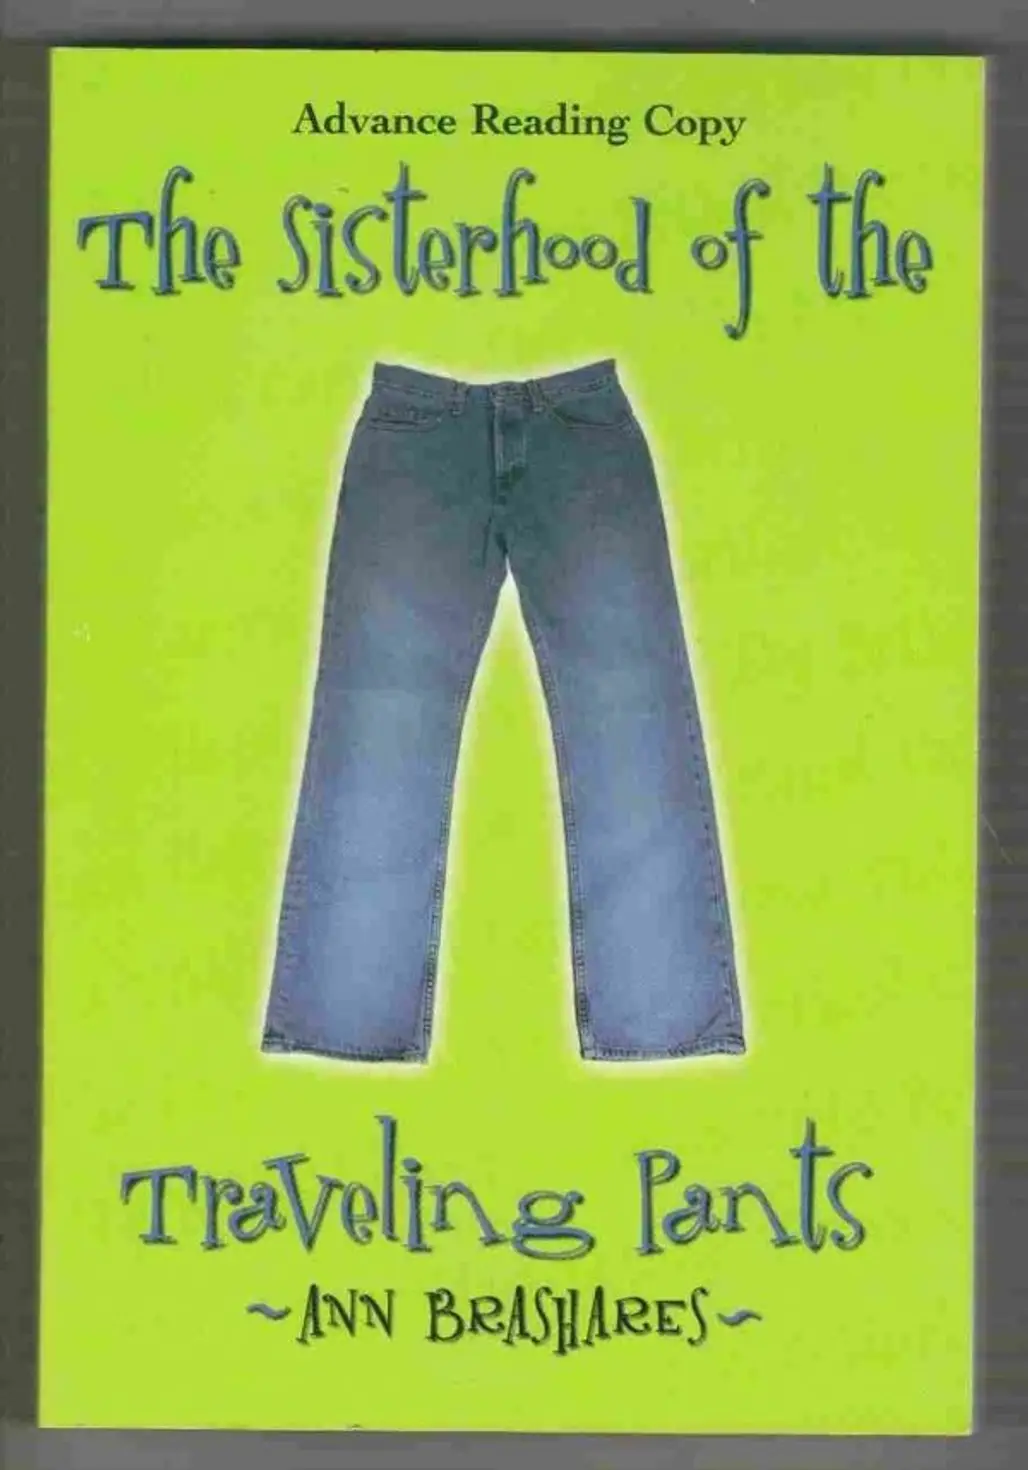 The Sisterhood of the Traveling Pants Series